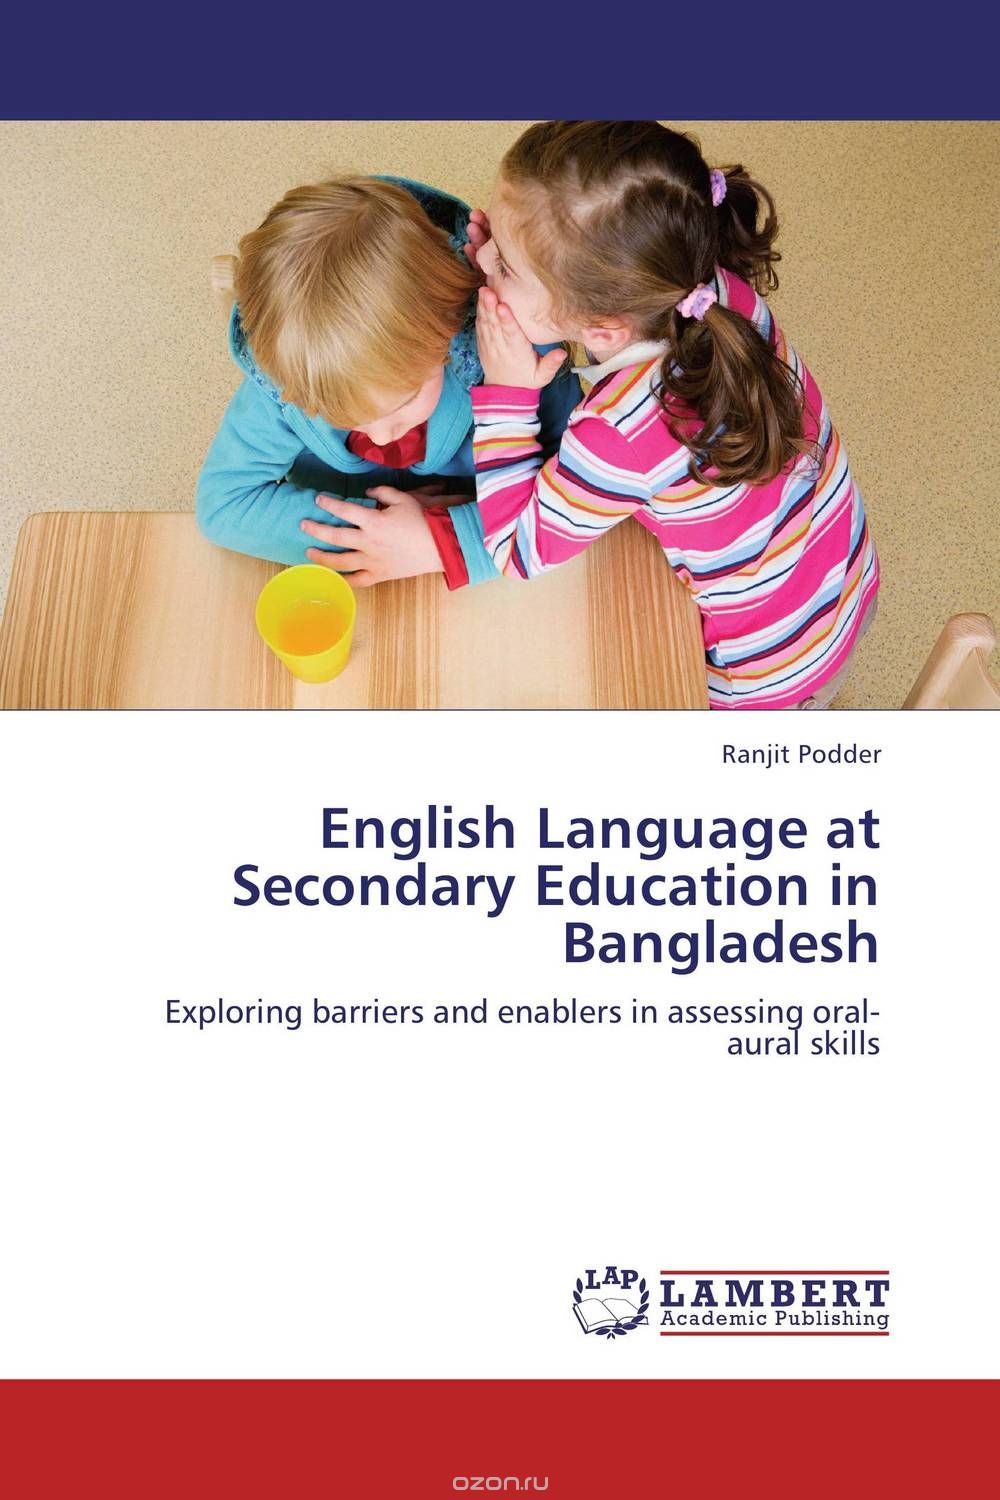 Скачать книгу "English Language at Secondary Education in Bangladesh"